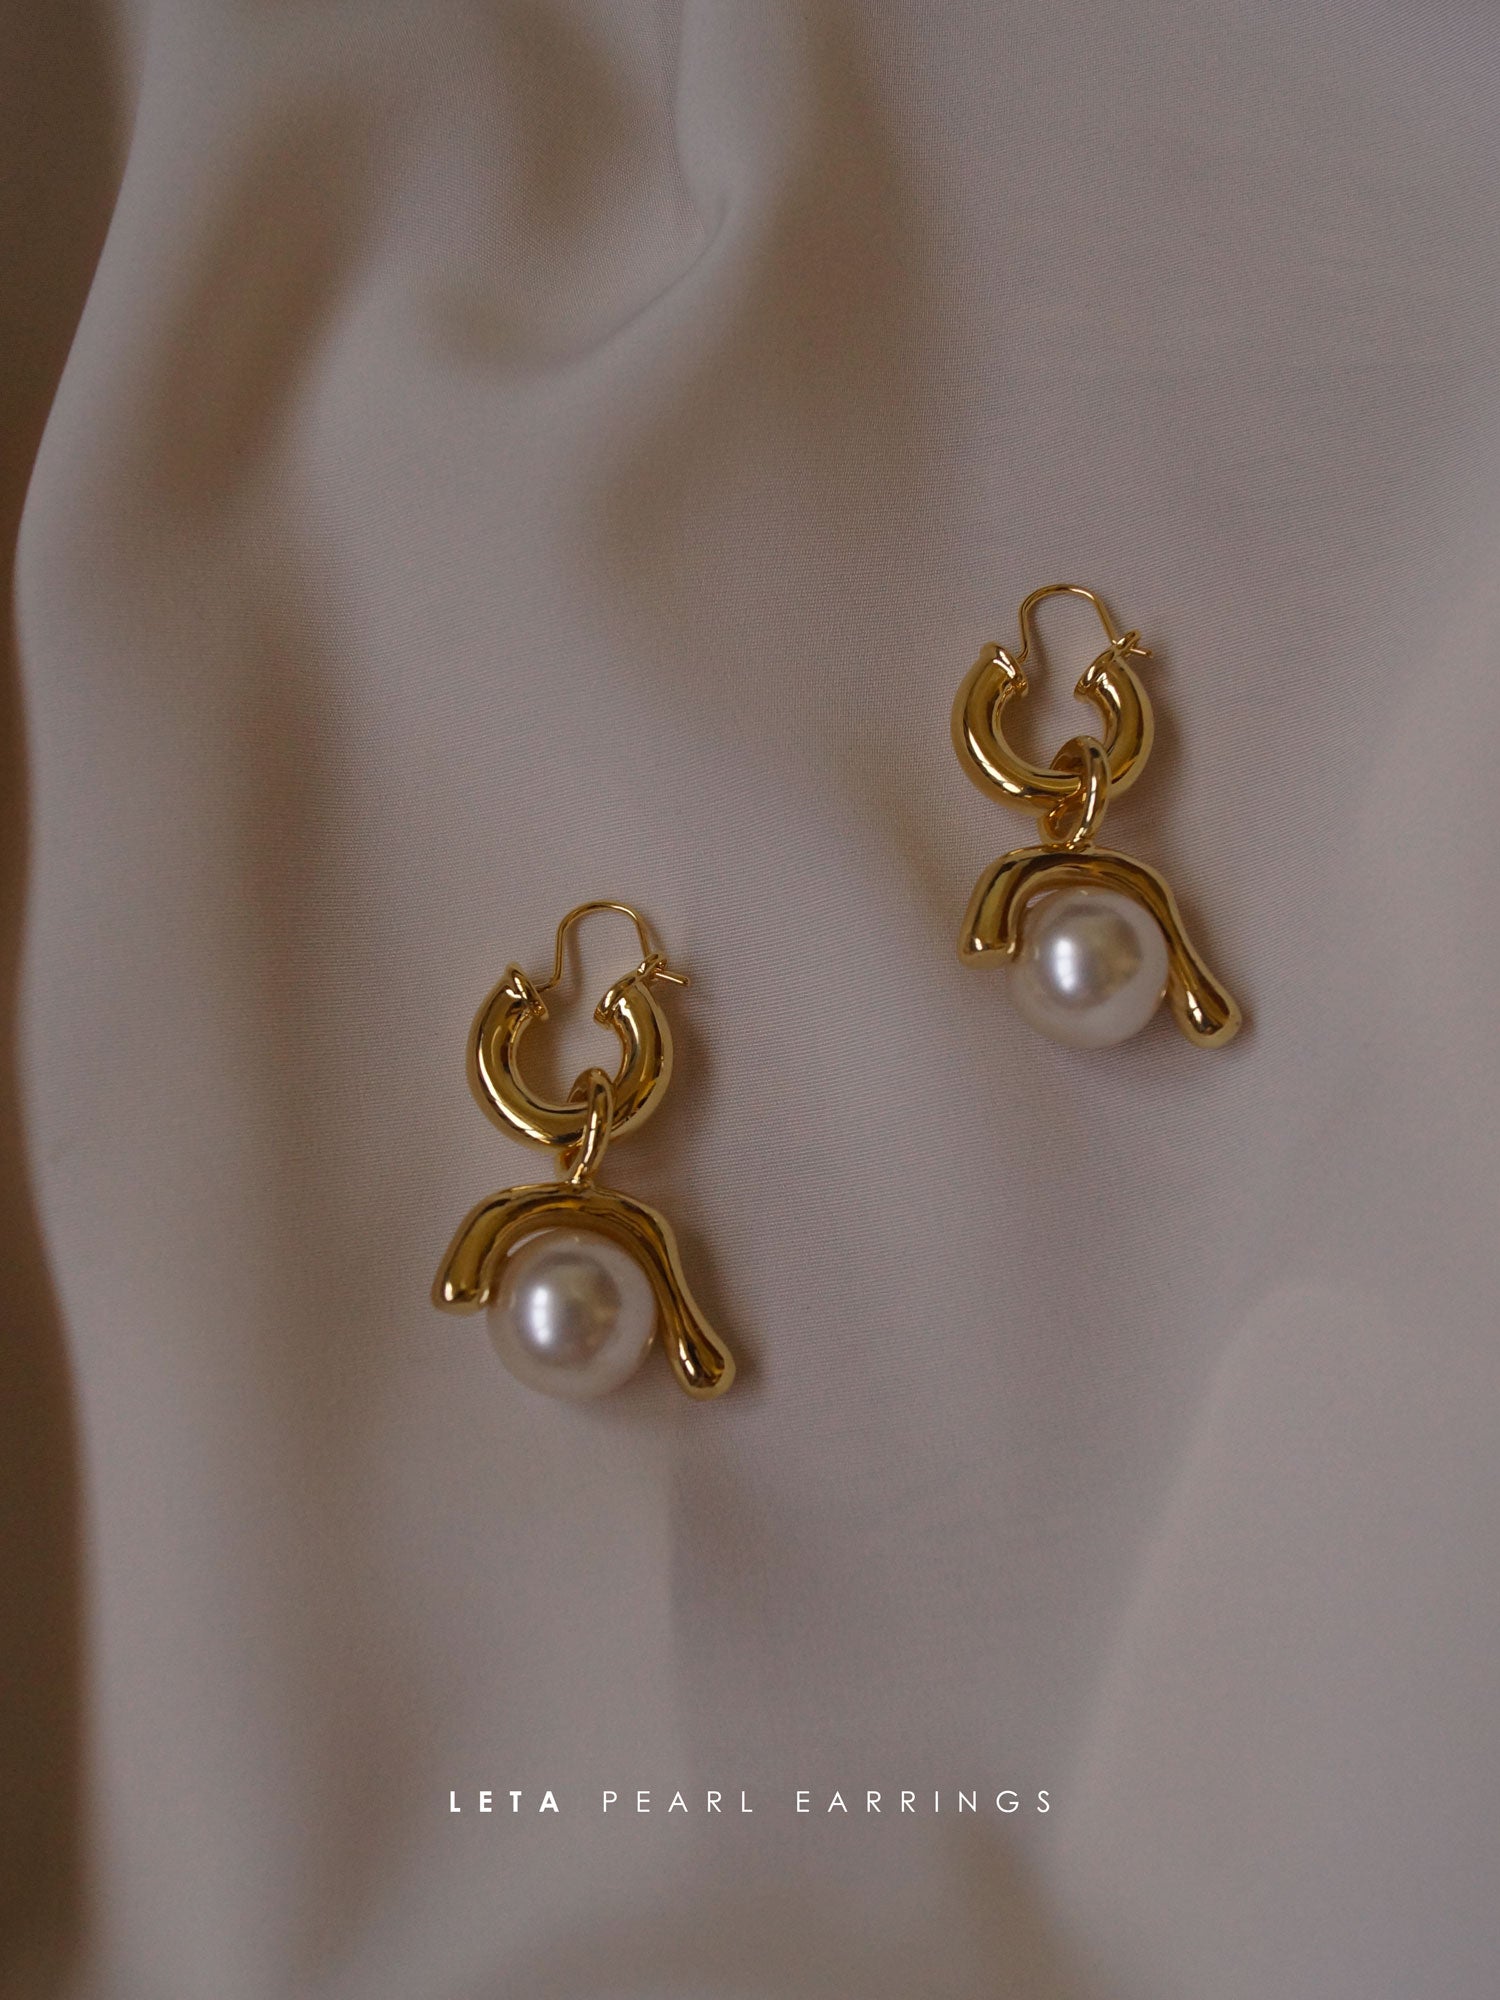 Leta Pearl Earrings *18k Gold-plated